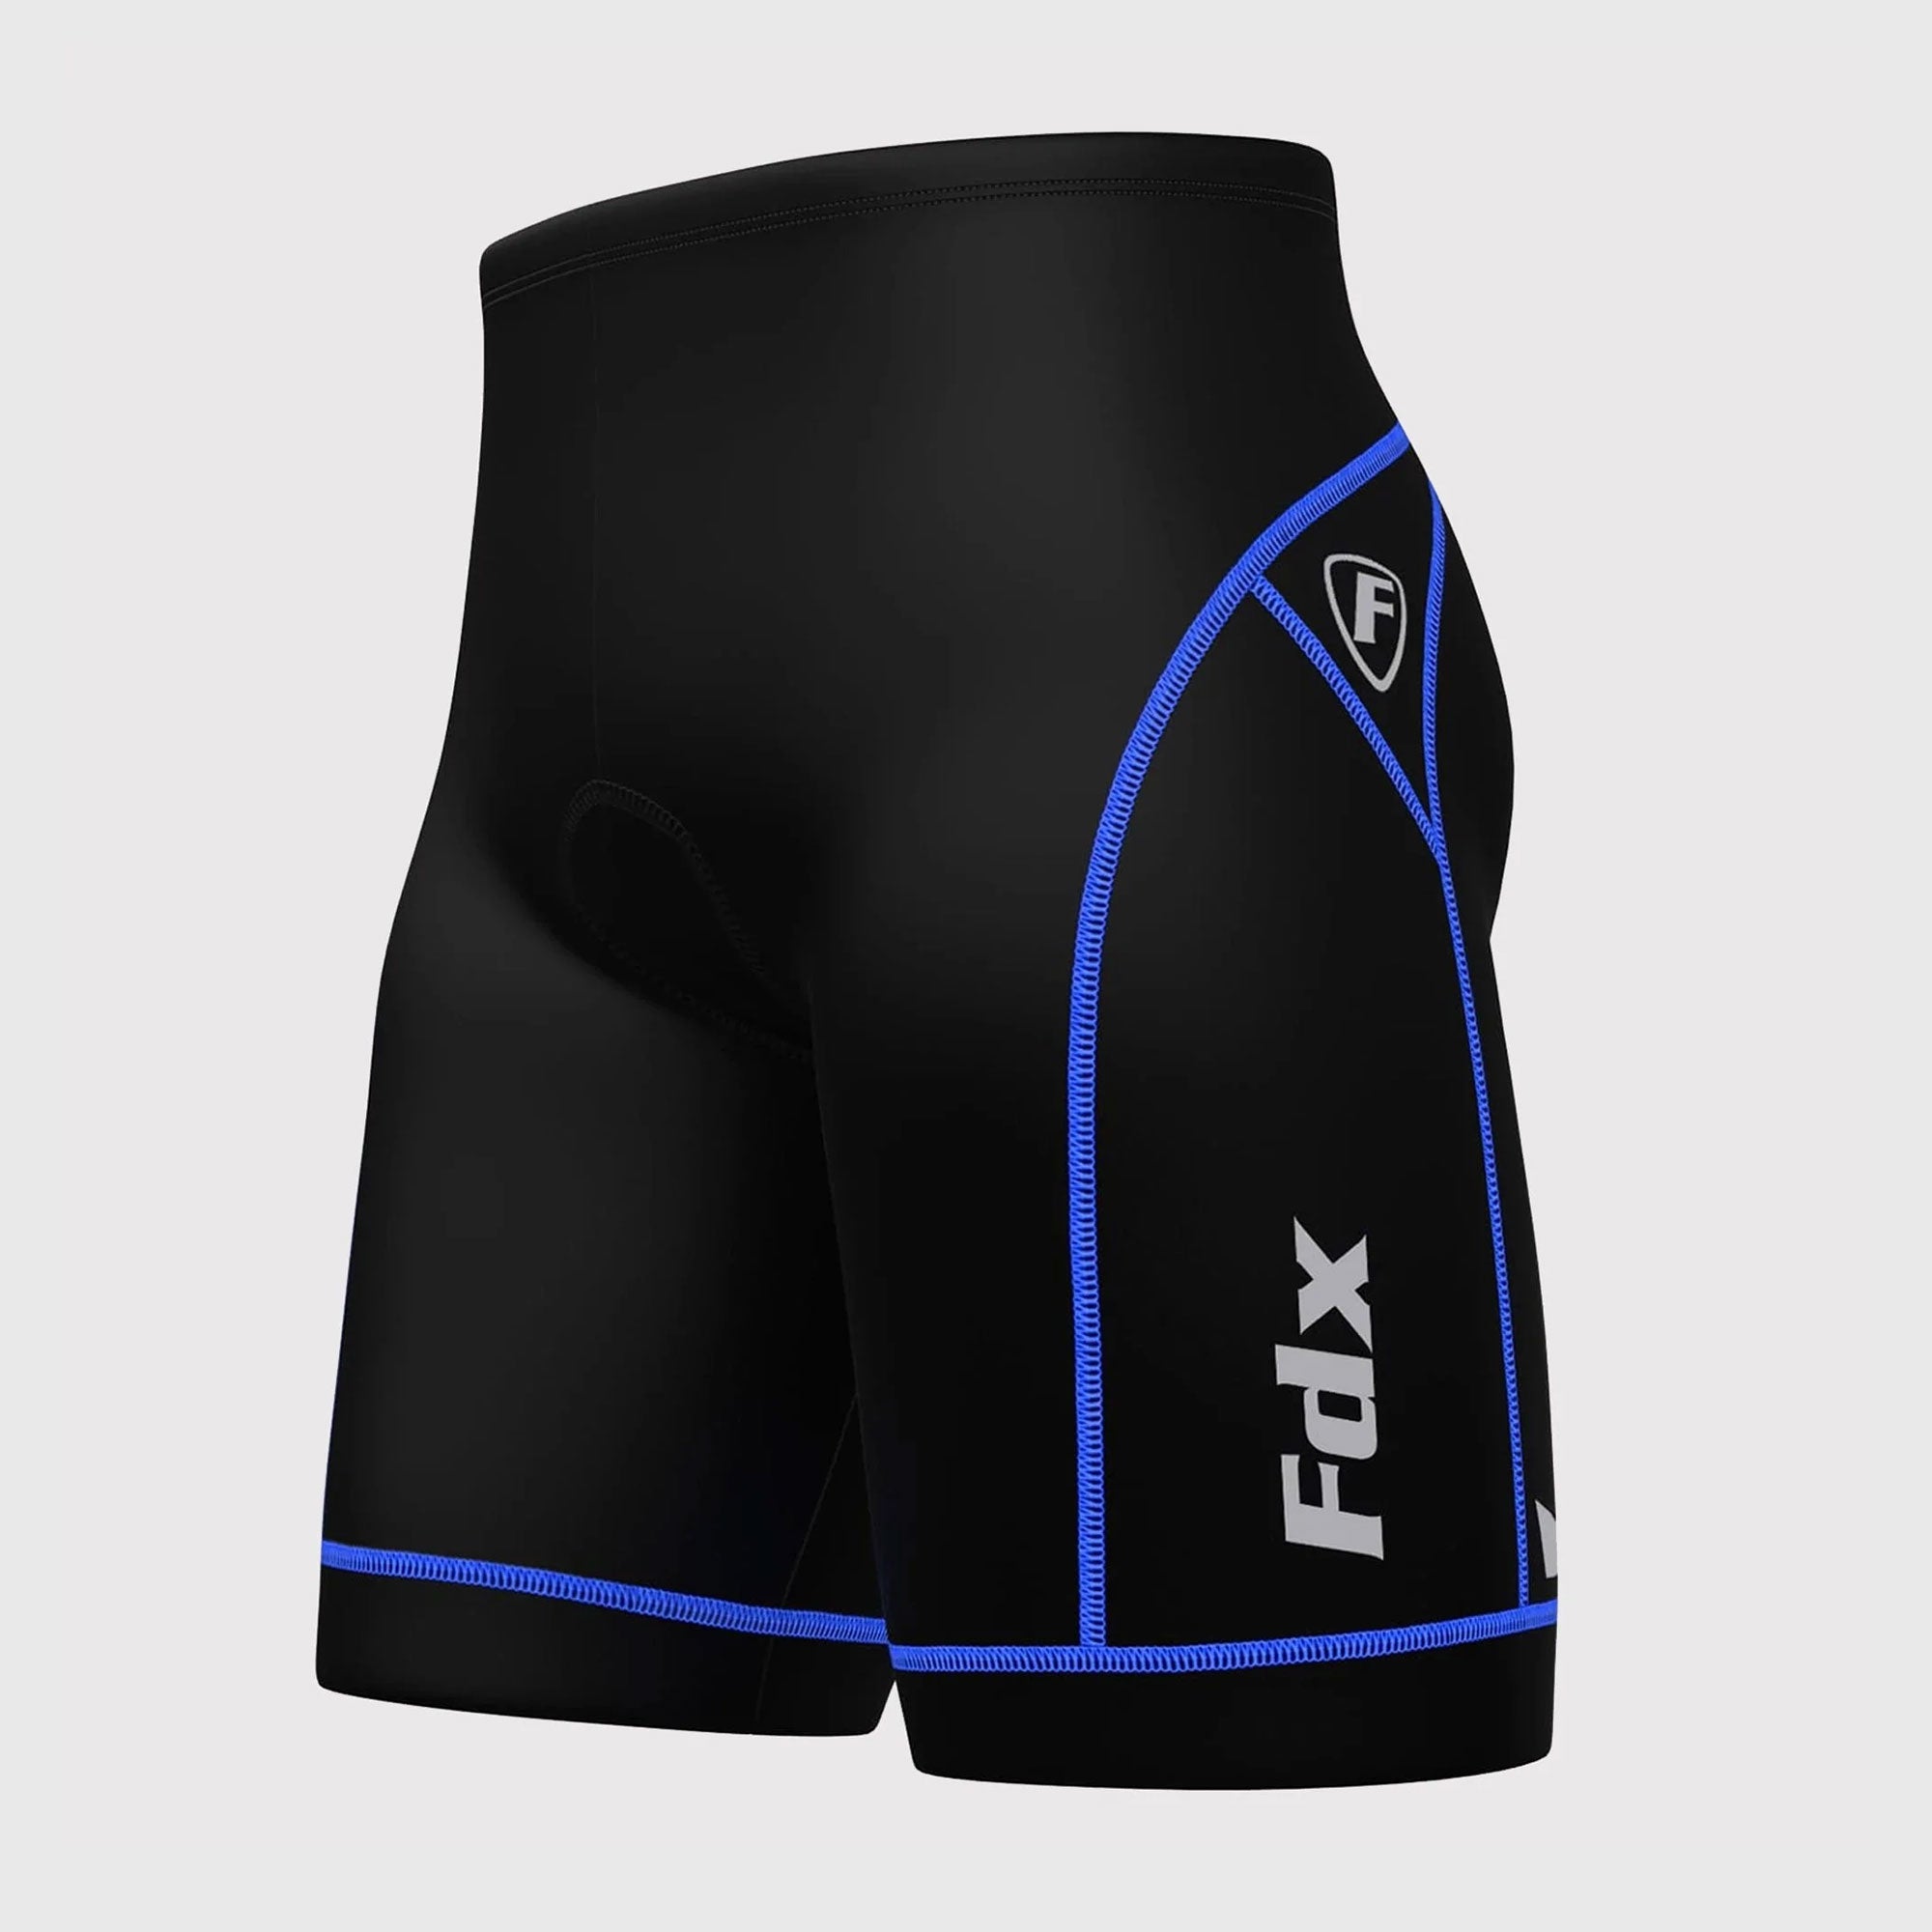 Fdx Ridest Blue Men's Padded Summer Cycling Shorts